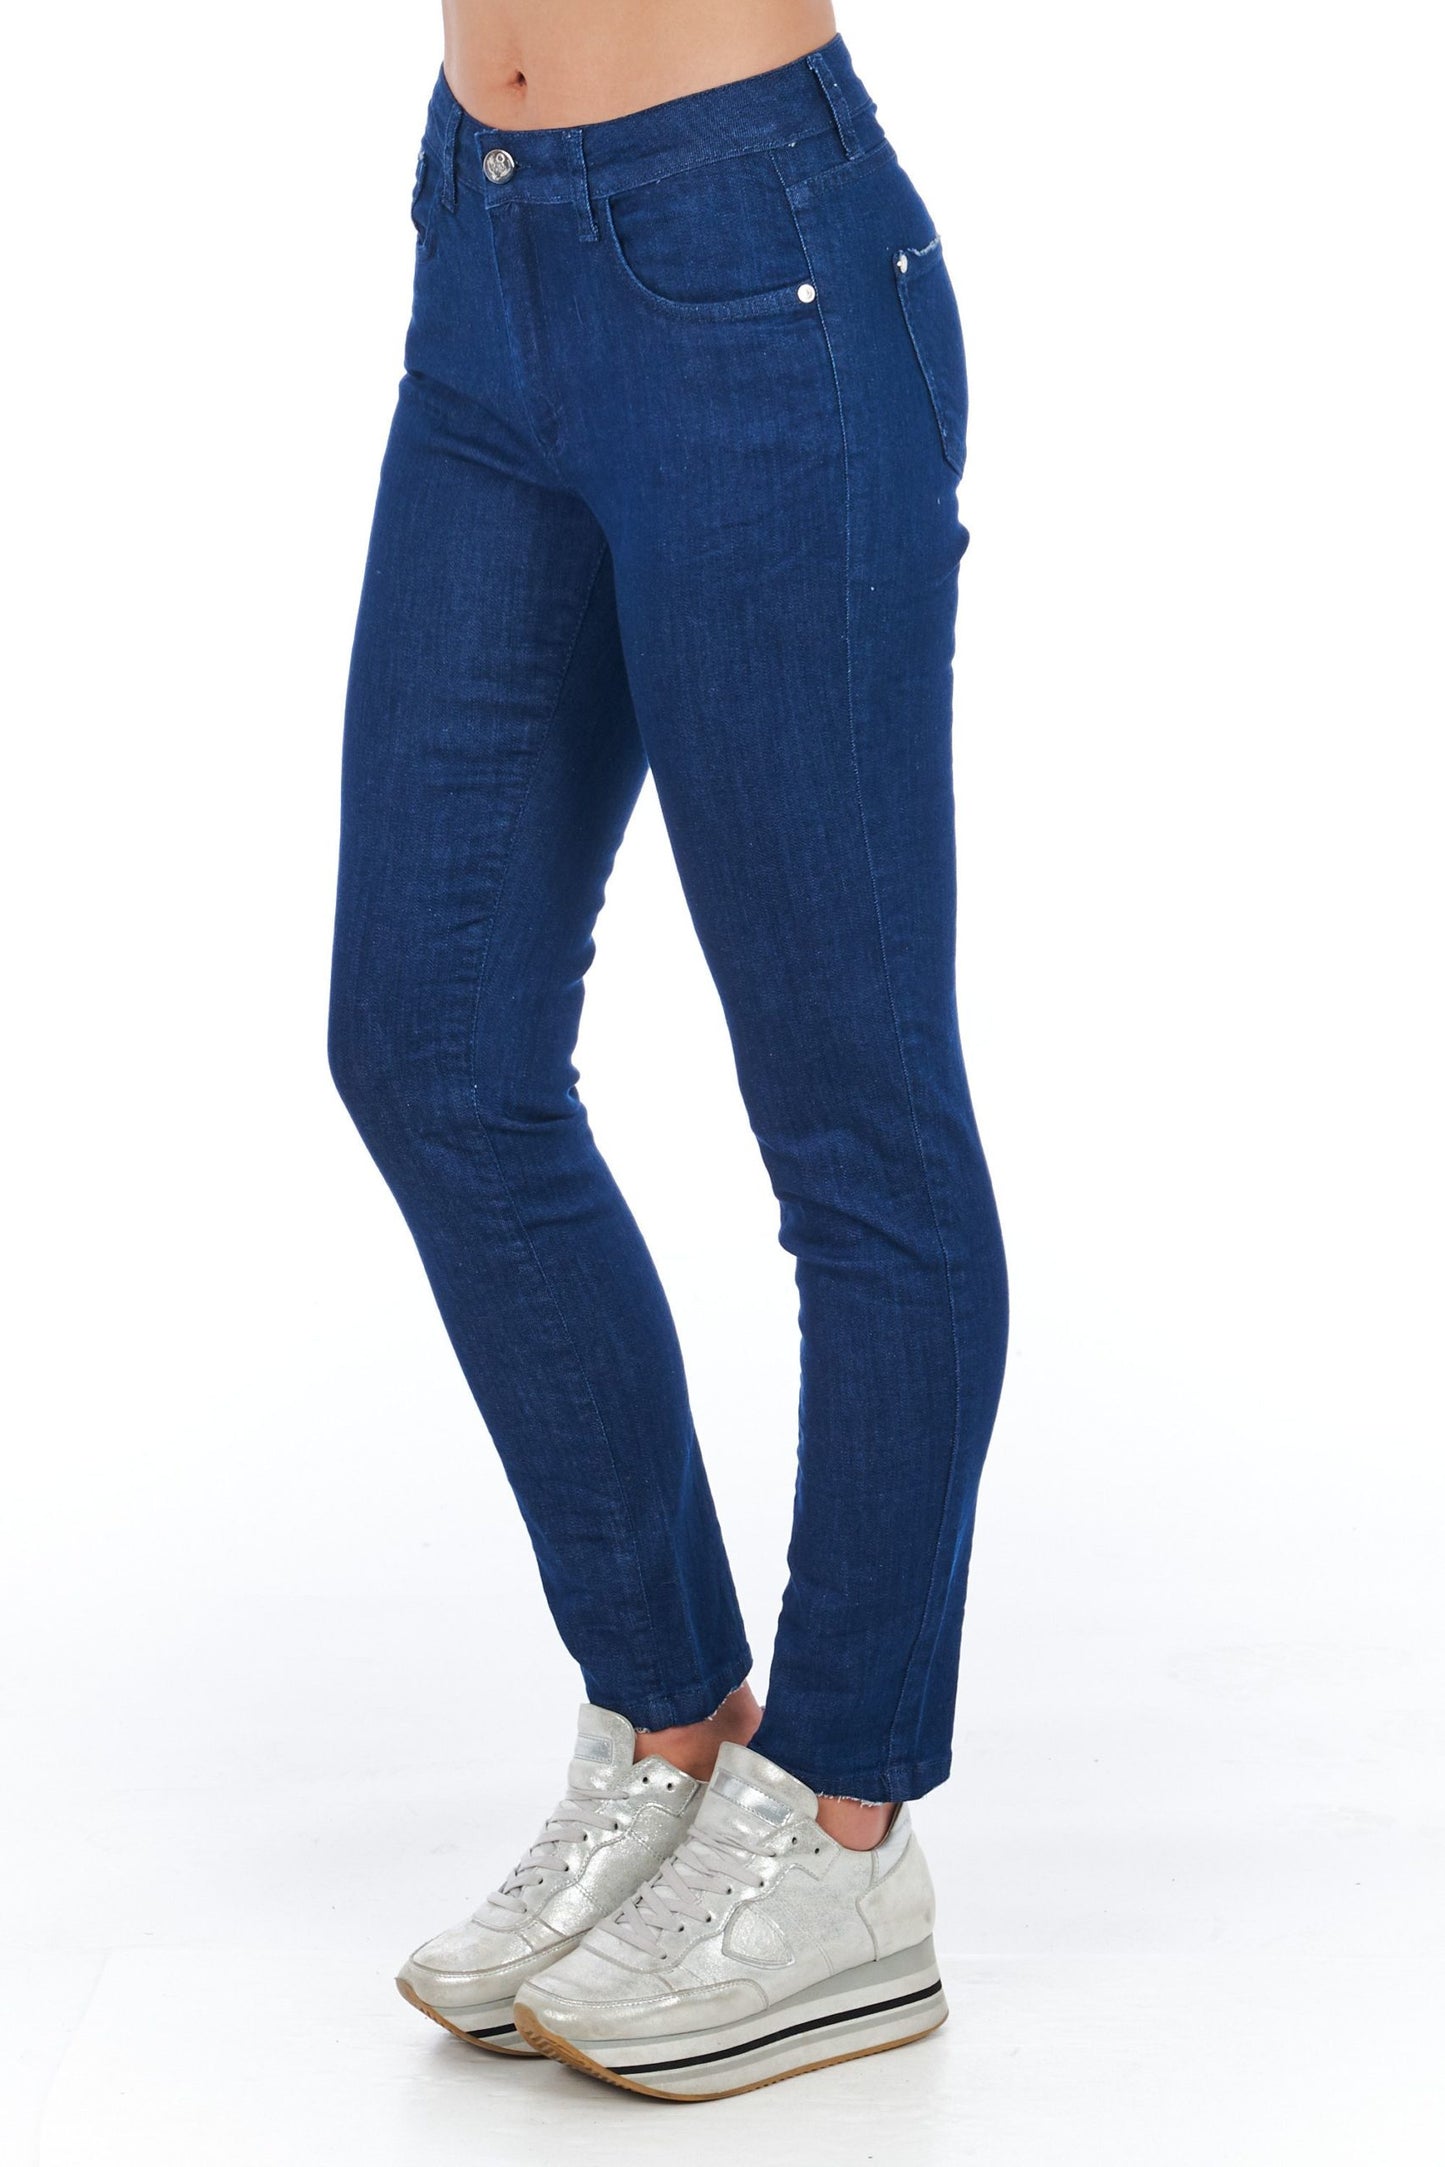 Frankie Morello Blue Cotton Jeans & Pant - DEA STILOSA MILANO